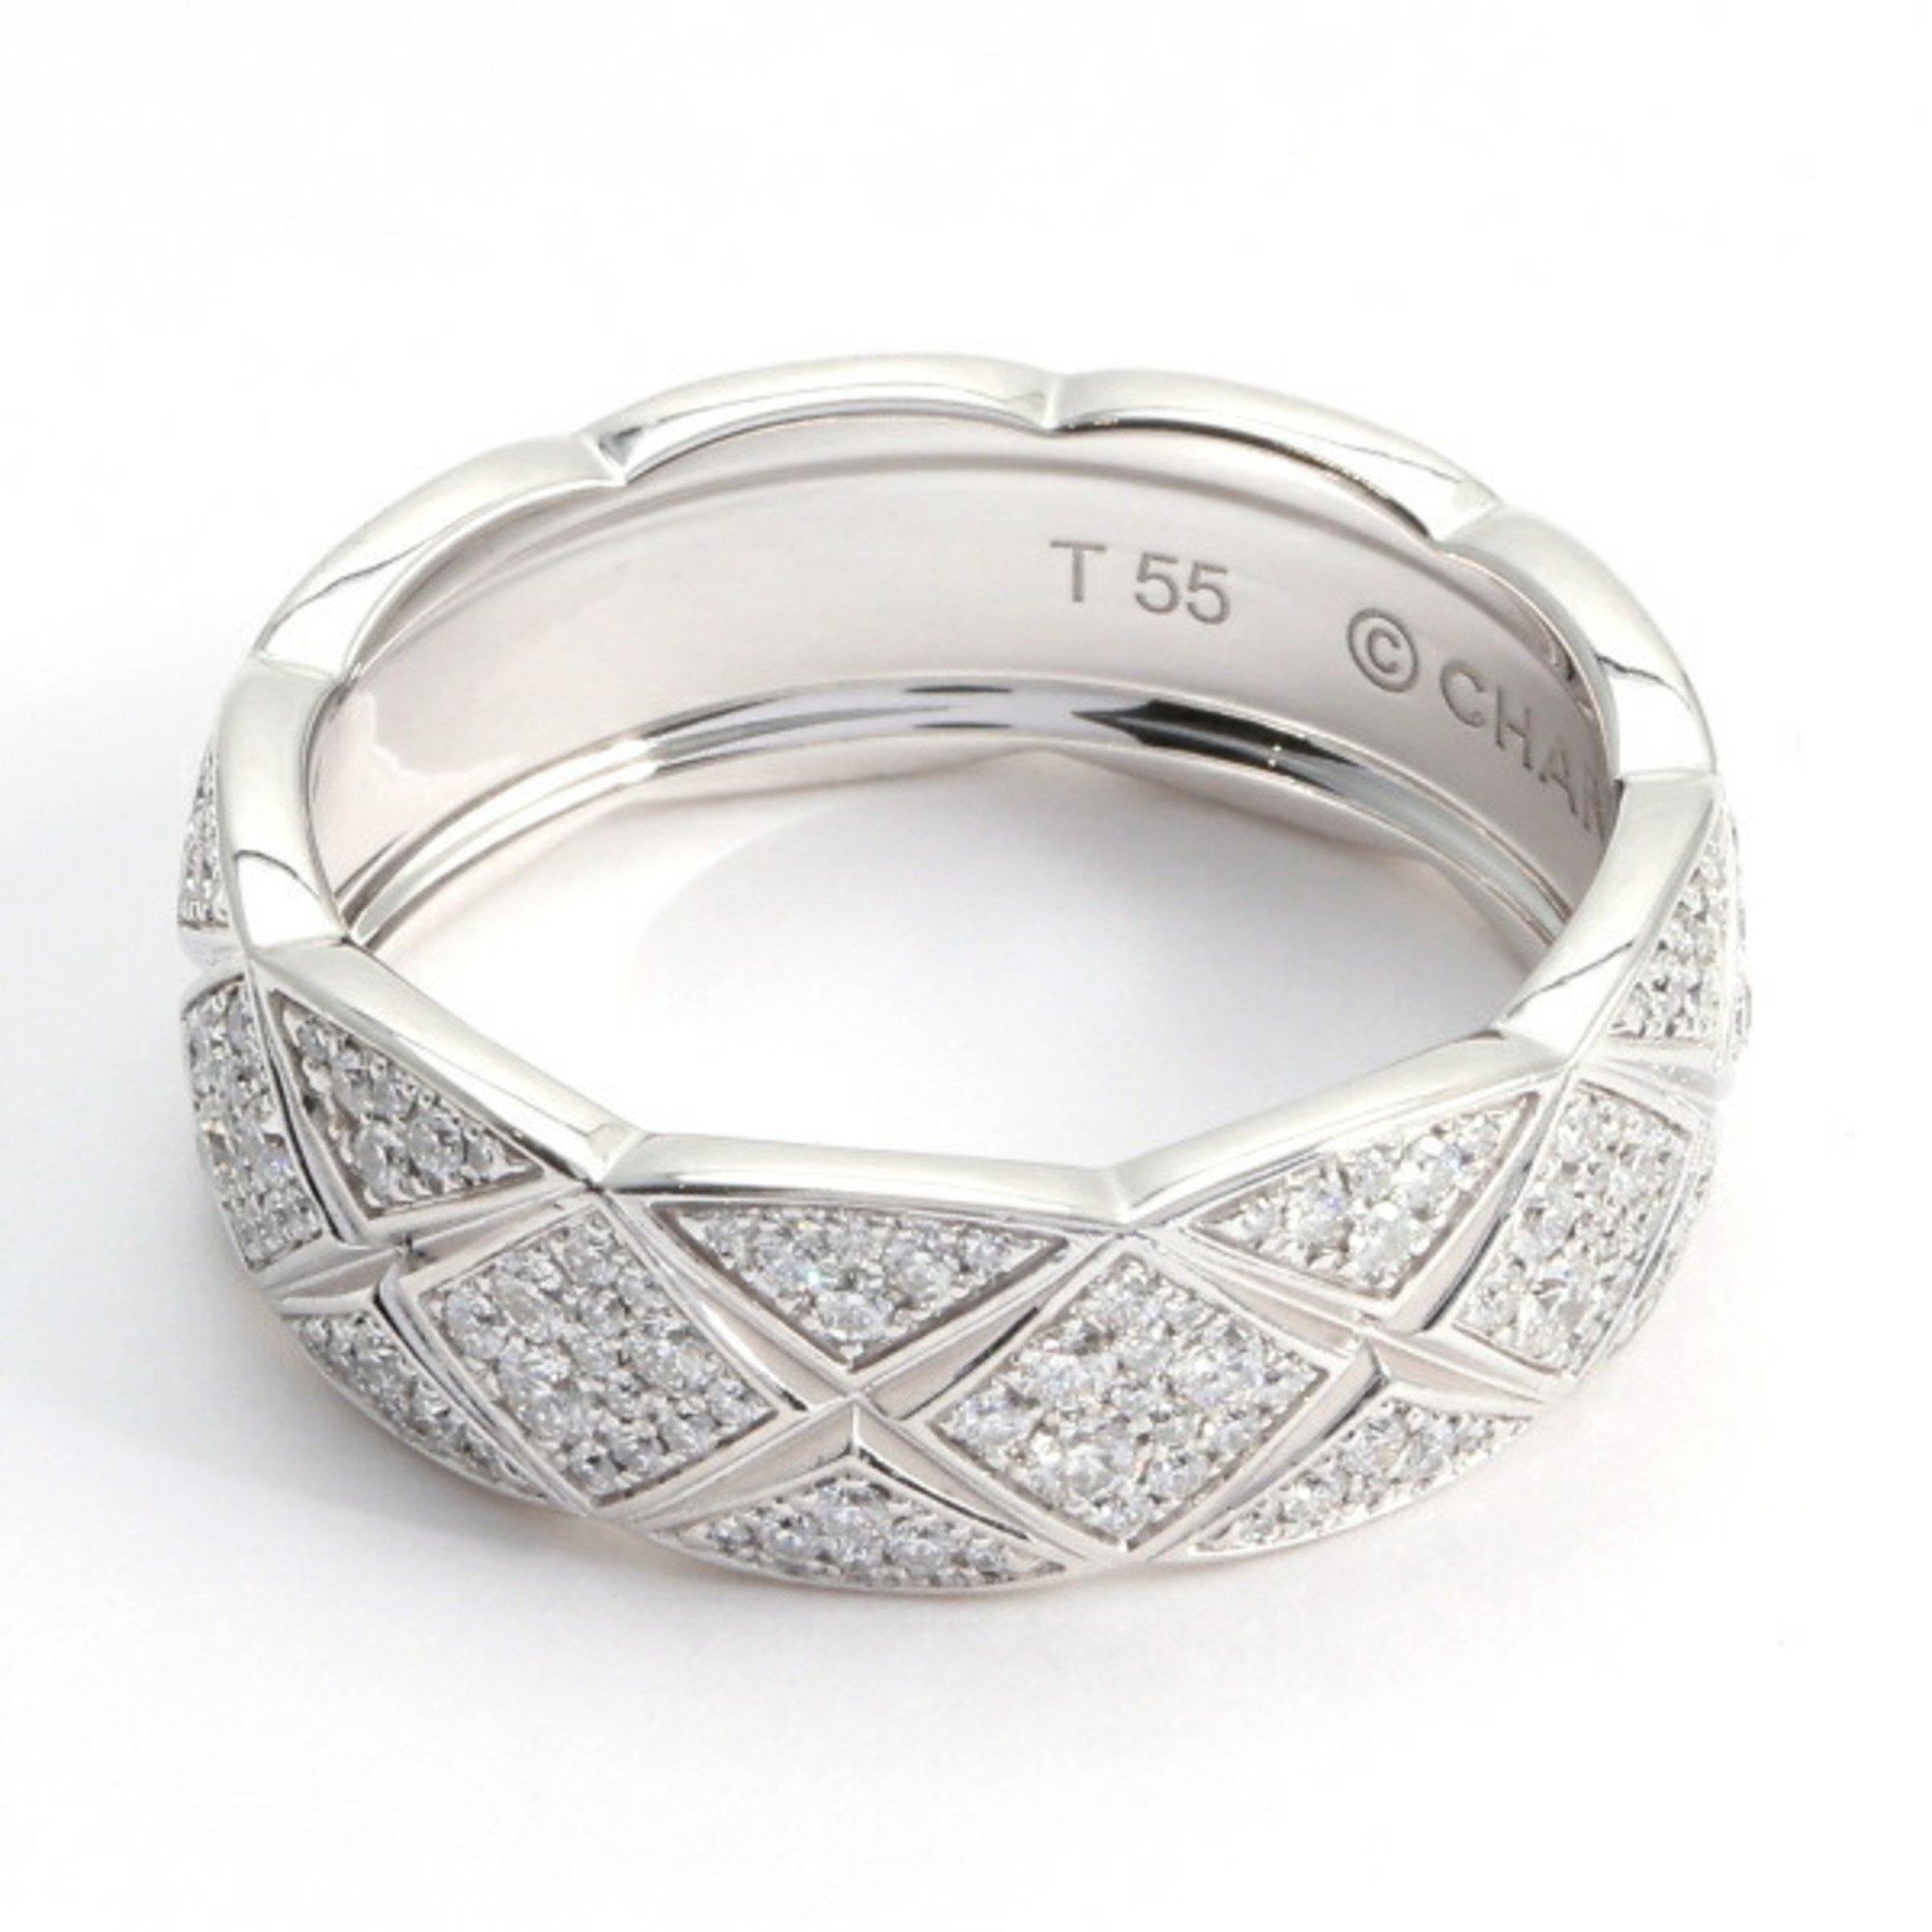 Chanel Coco Crush Medium K18WG White Gold Ring